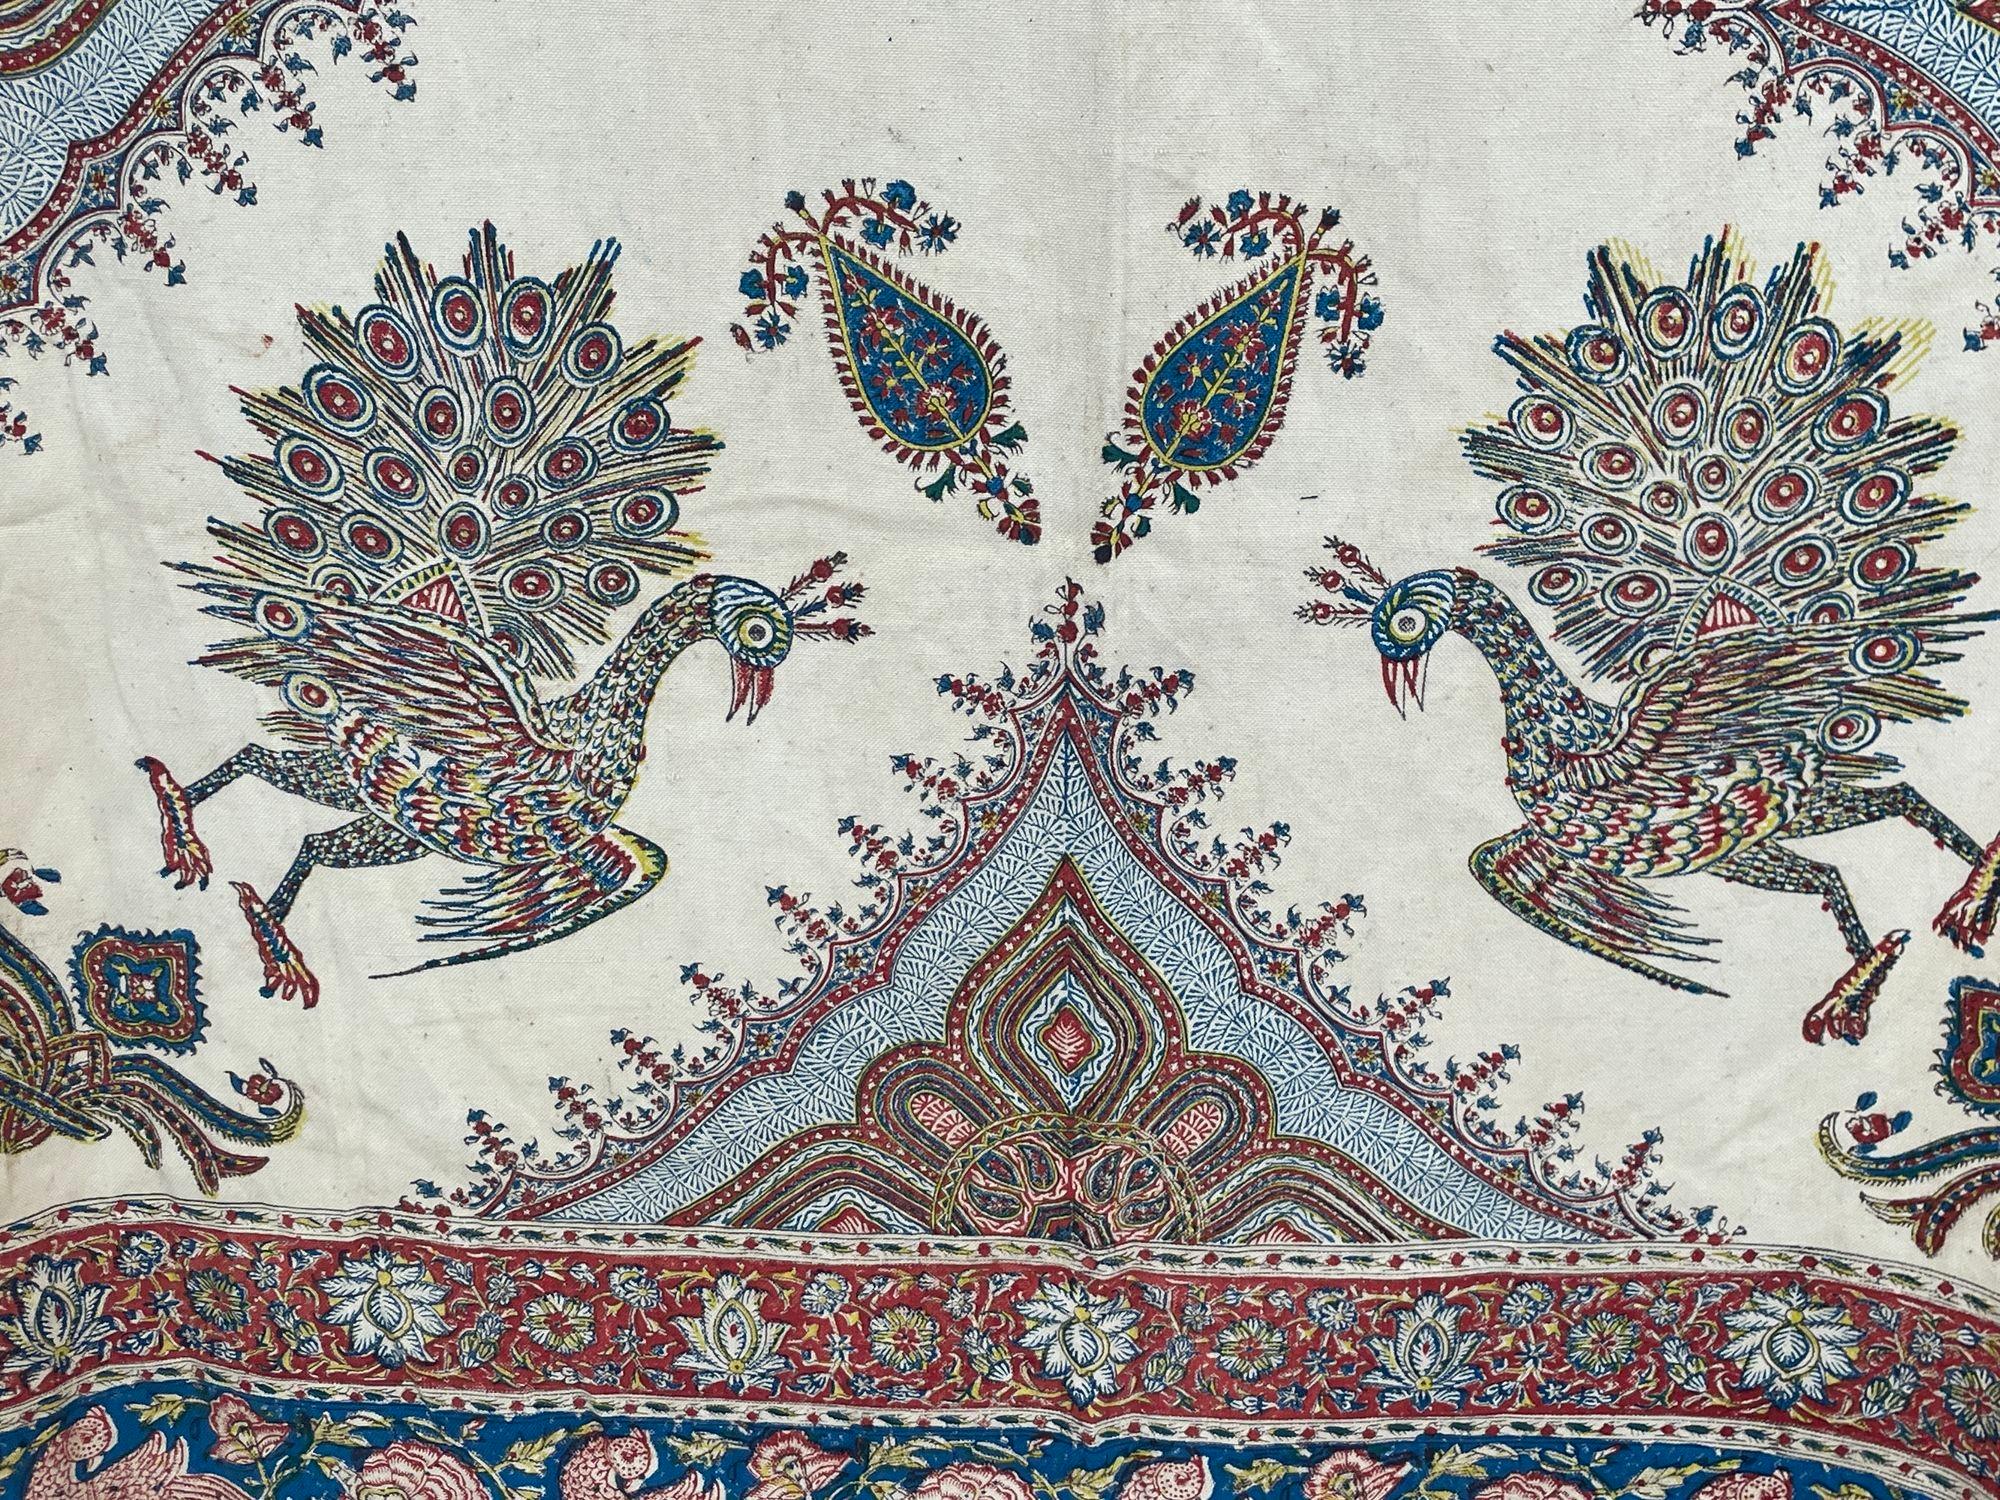 Large Isfahan Ghalamkar Persian Paisley Textile Block Printed 1950s For Sale 6